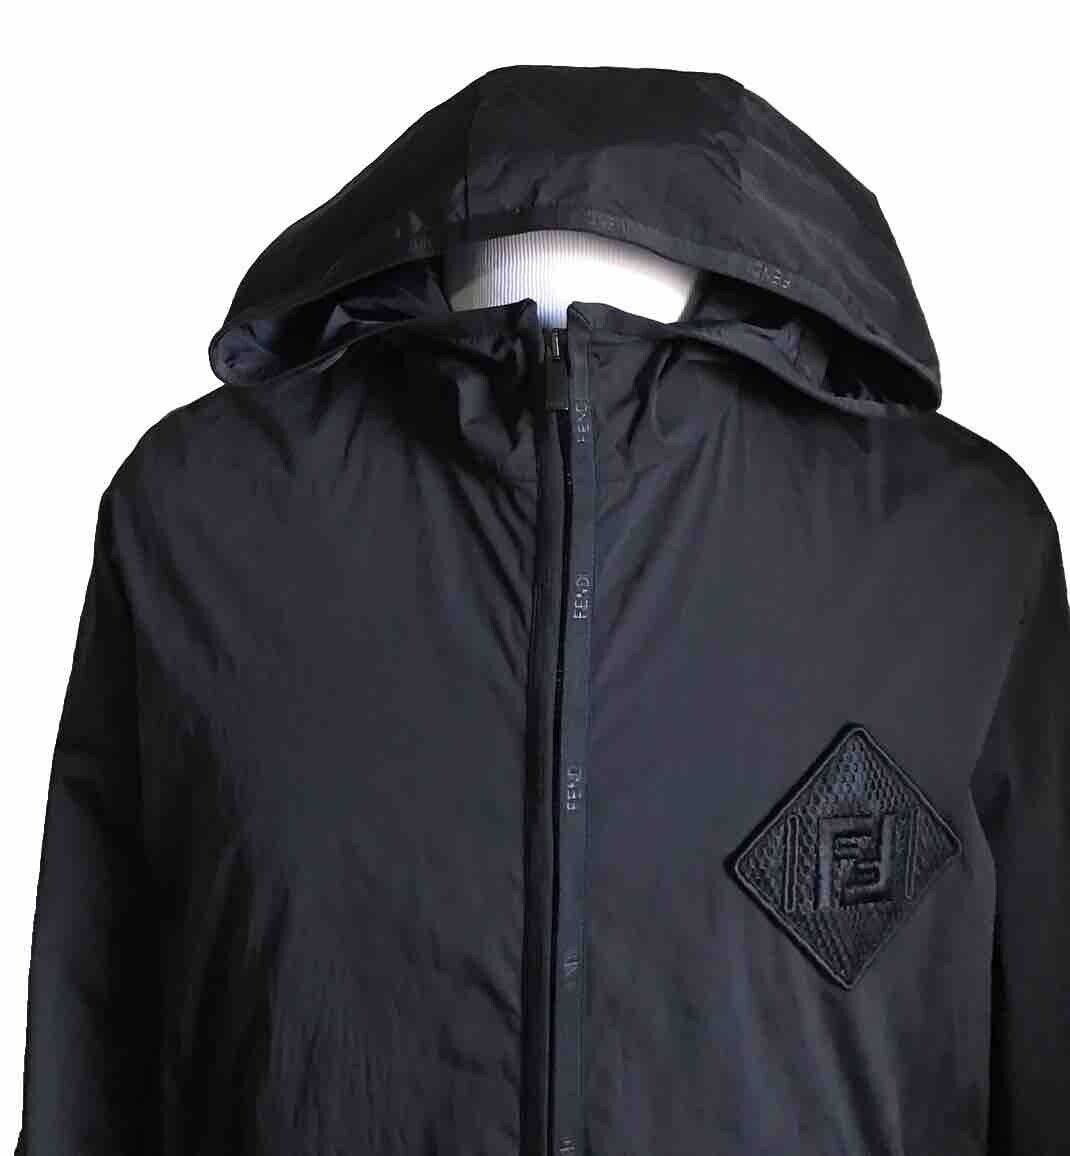 New $2350 Fendi Men’s Windbreaker Coat Black Size 38 US/48 It Italy